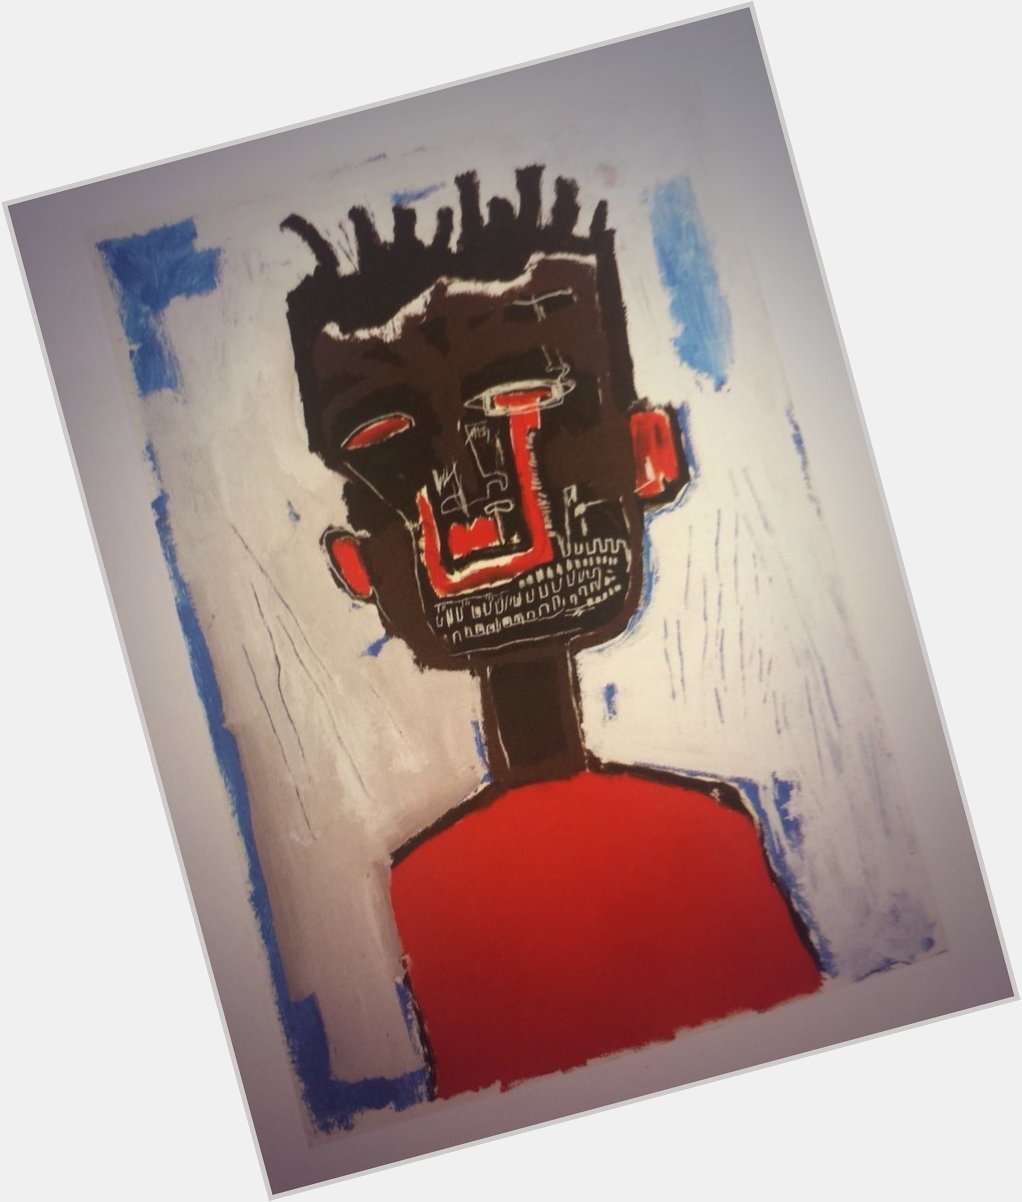 Happy birthday Jean-Michel Basquiat!  